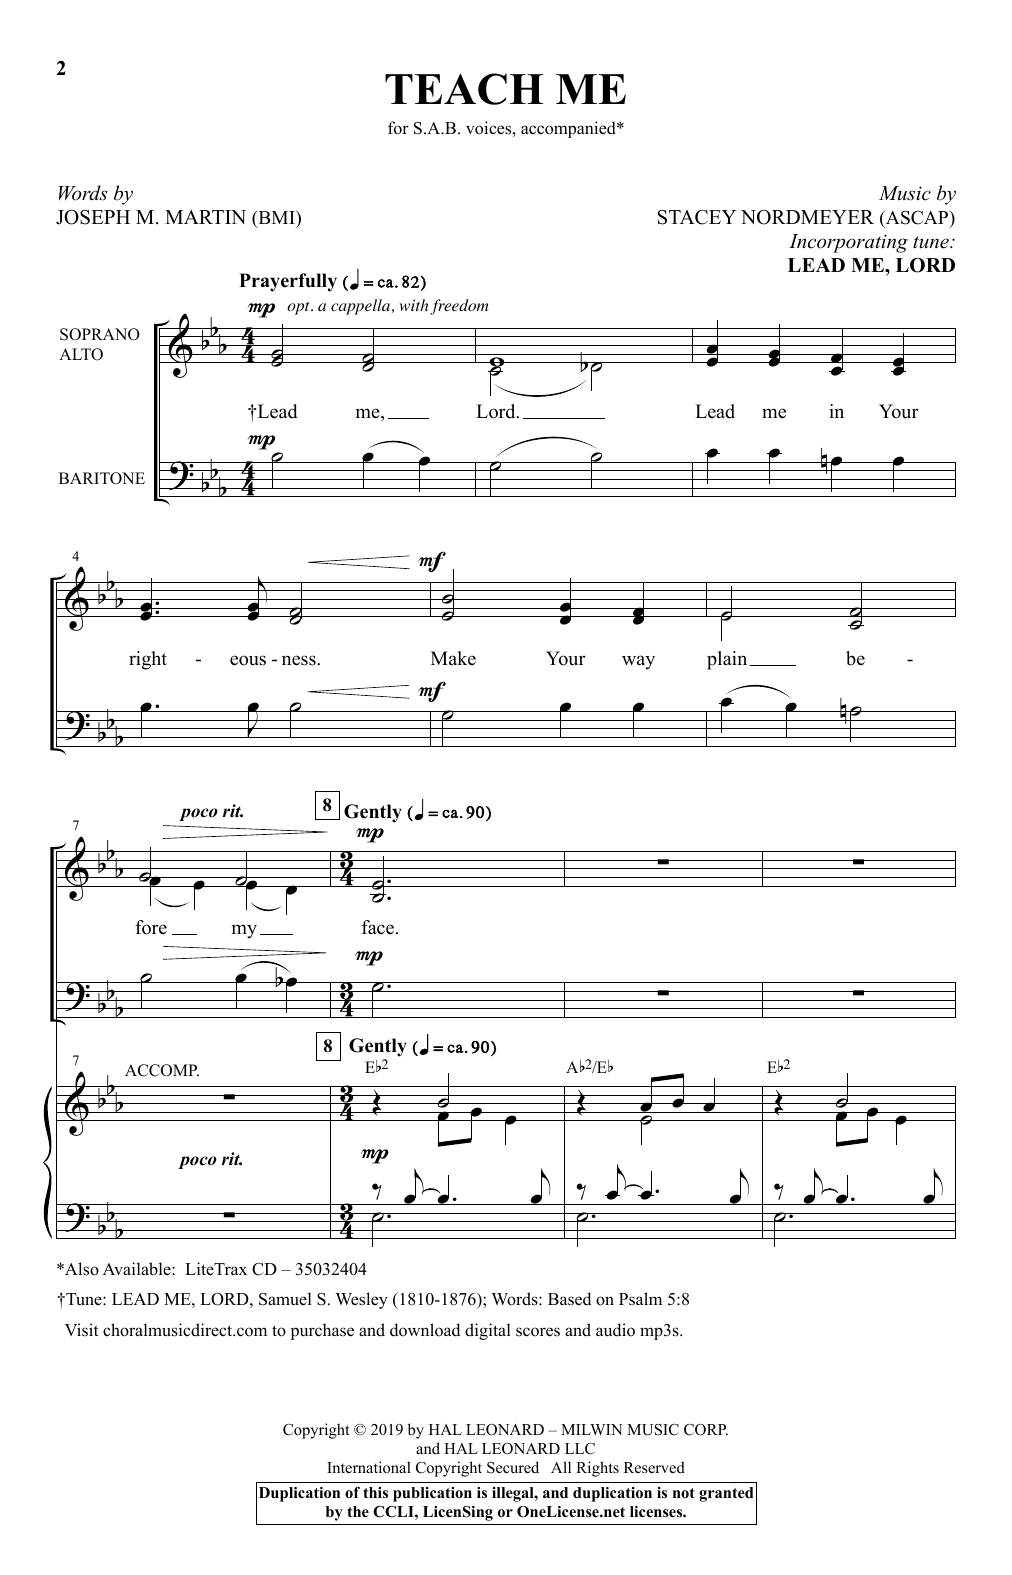 Joseph M. Martin & Stacey Nordmeyer Teach Me Sheet Music Notes & Chords for SAB Choir - Download or Print PDF